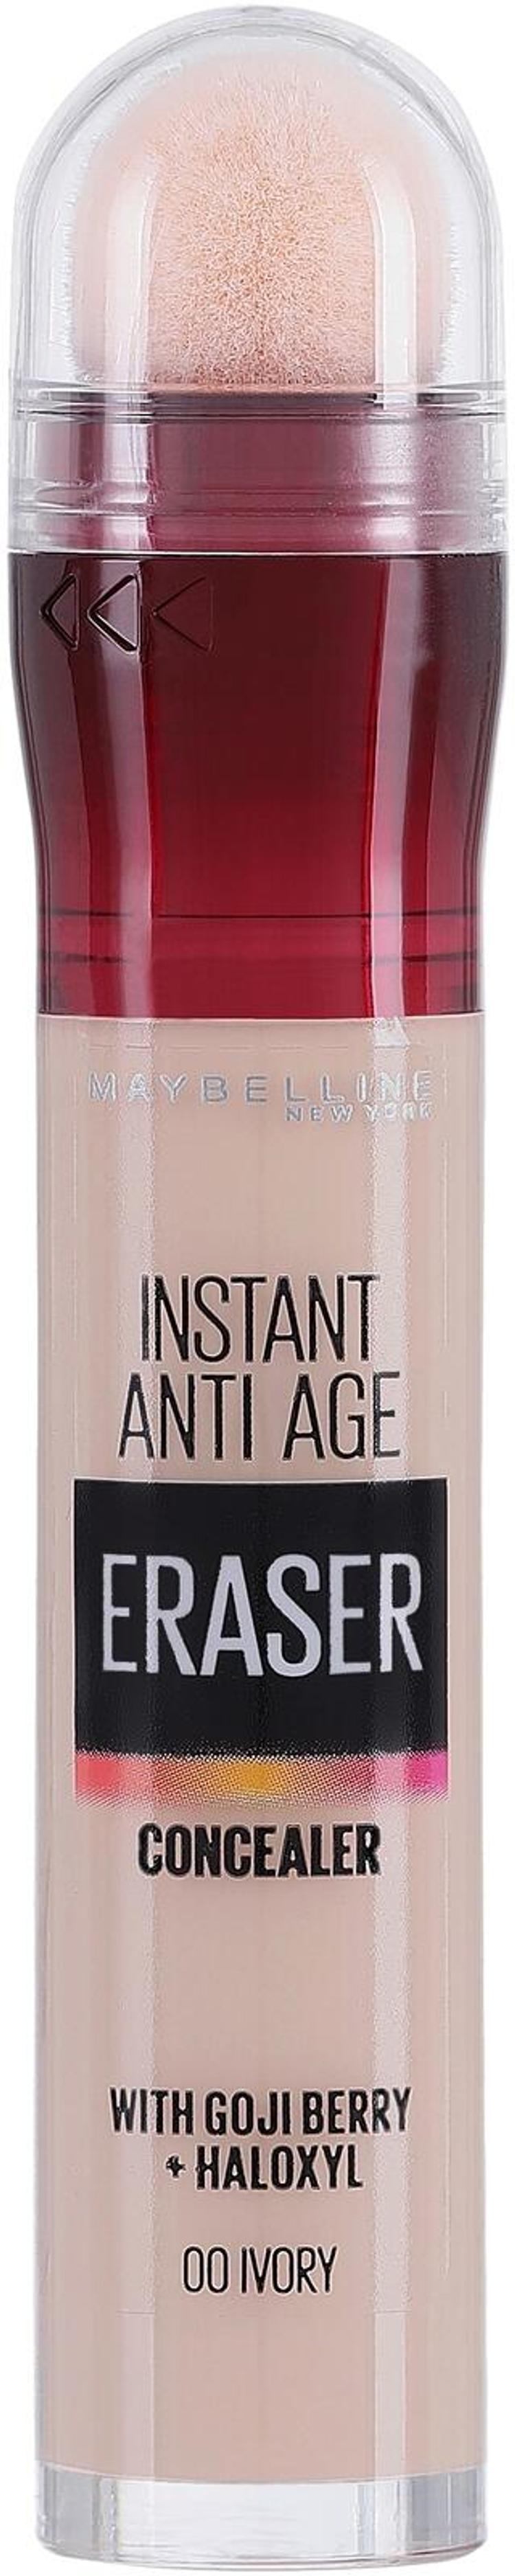 Maybelline New York Instant Anti Age Eraser 00 Ivory peitevoide 6,8ml